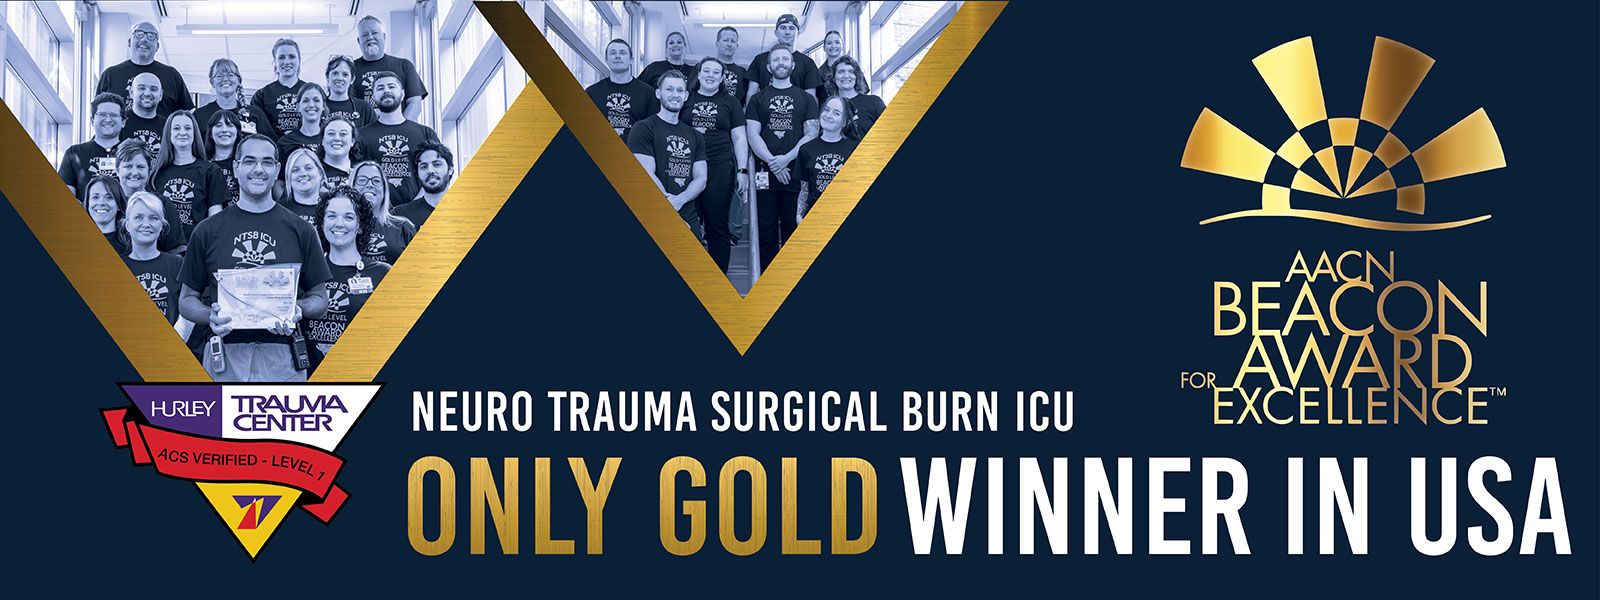 Hurley Trauma Center is a Gold Beacon Award Winner